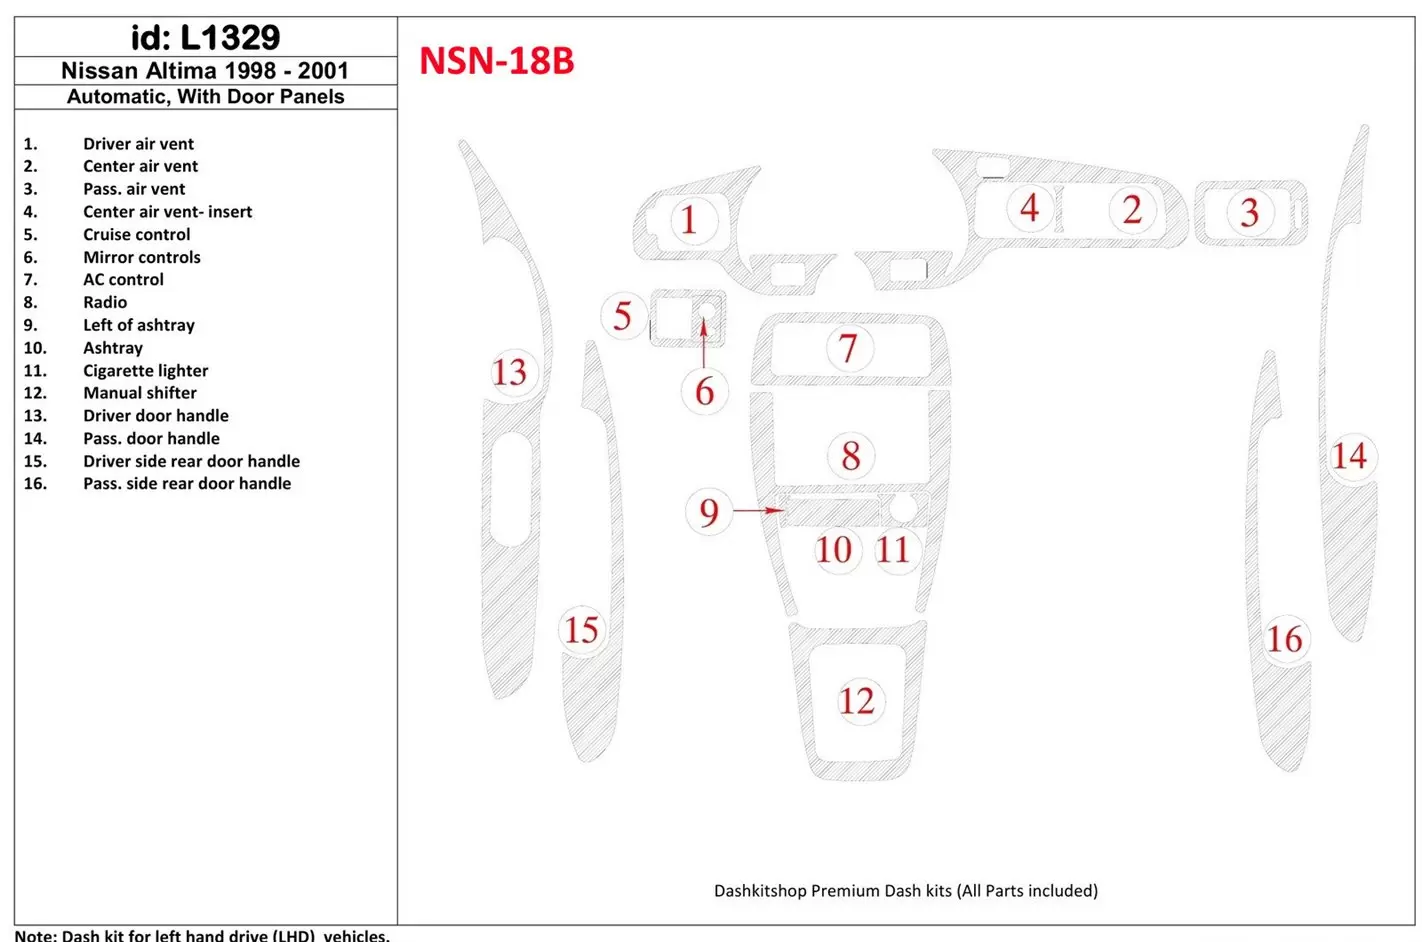 Nissan Altima 1998-2001 Manual Gearbox, With Door panels, 16 Parts set Interior BD Dash Trim Kit